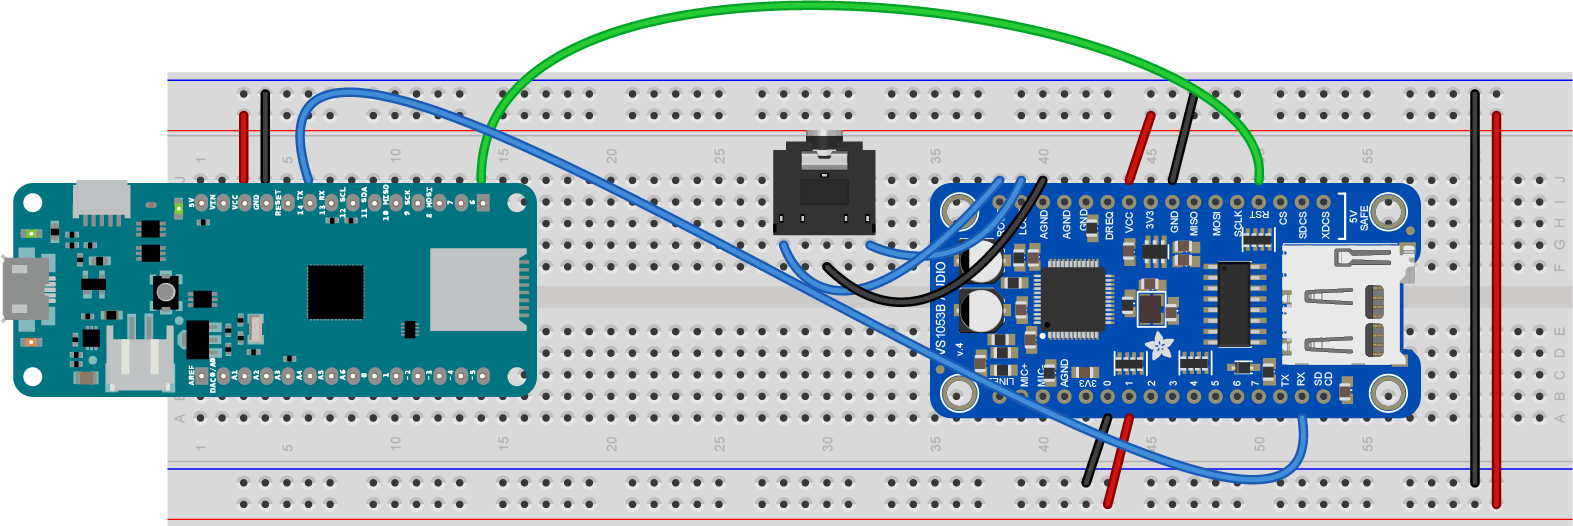 Figure 1. MKR board connected to an Adafruit VS1053 module.